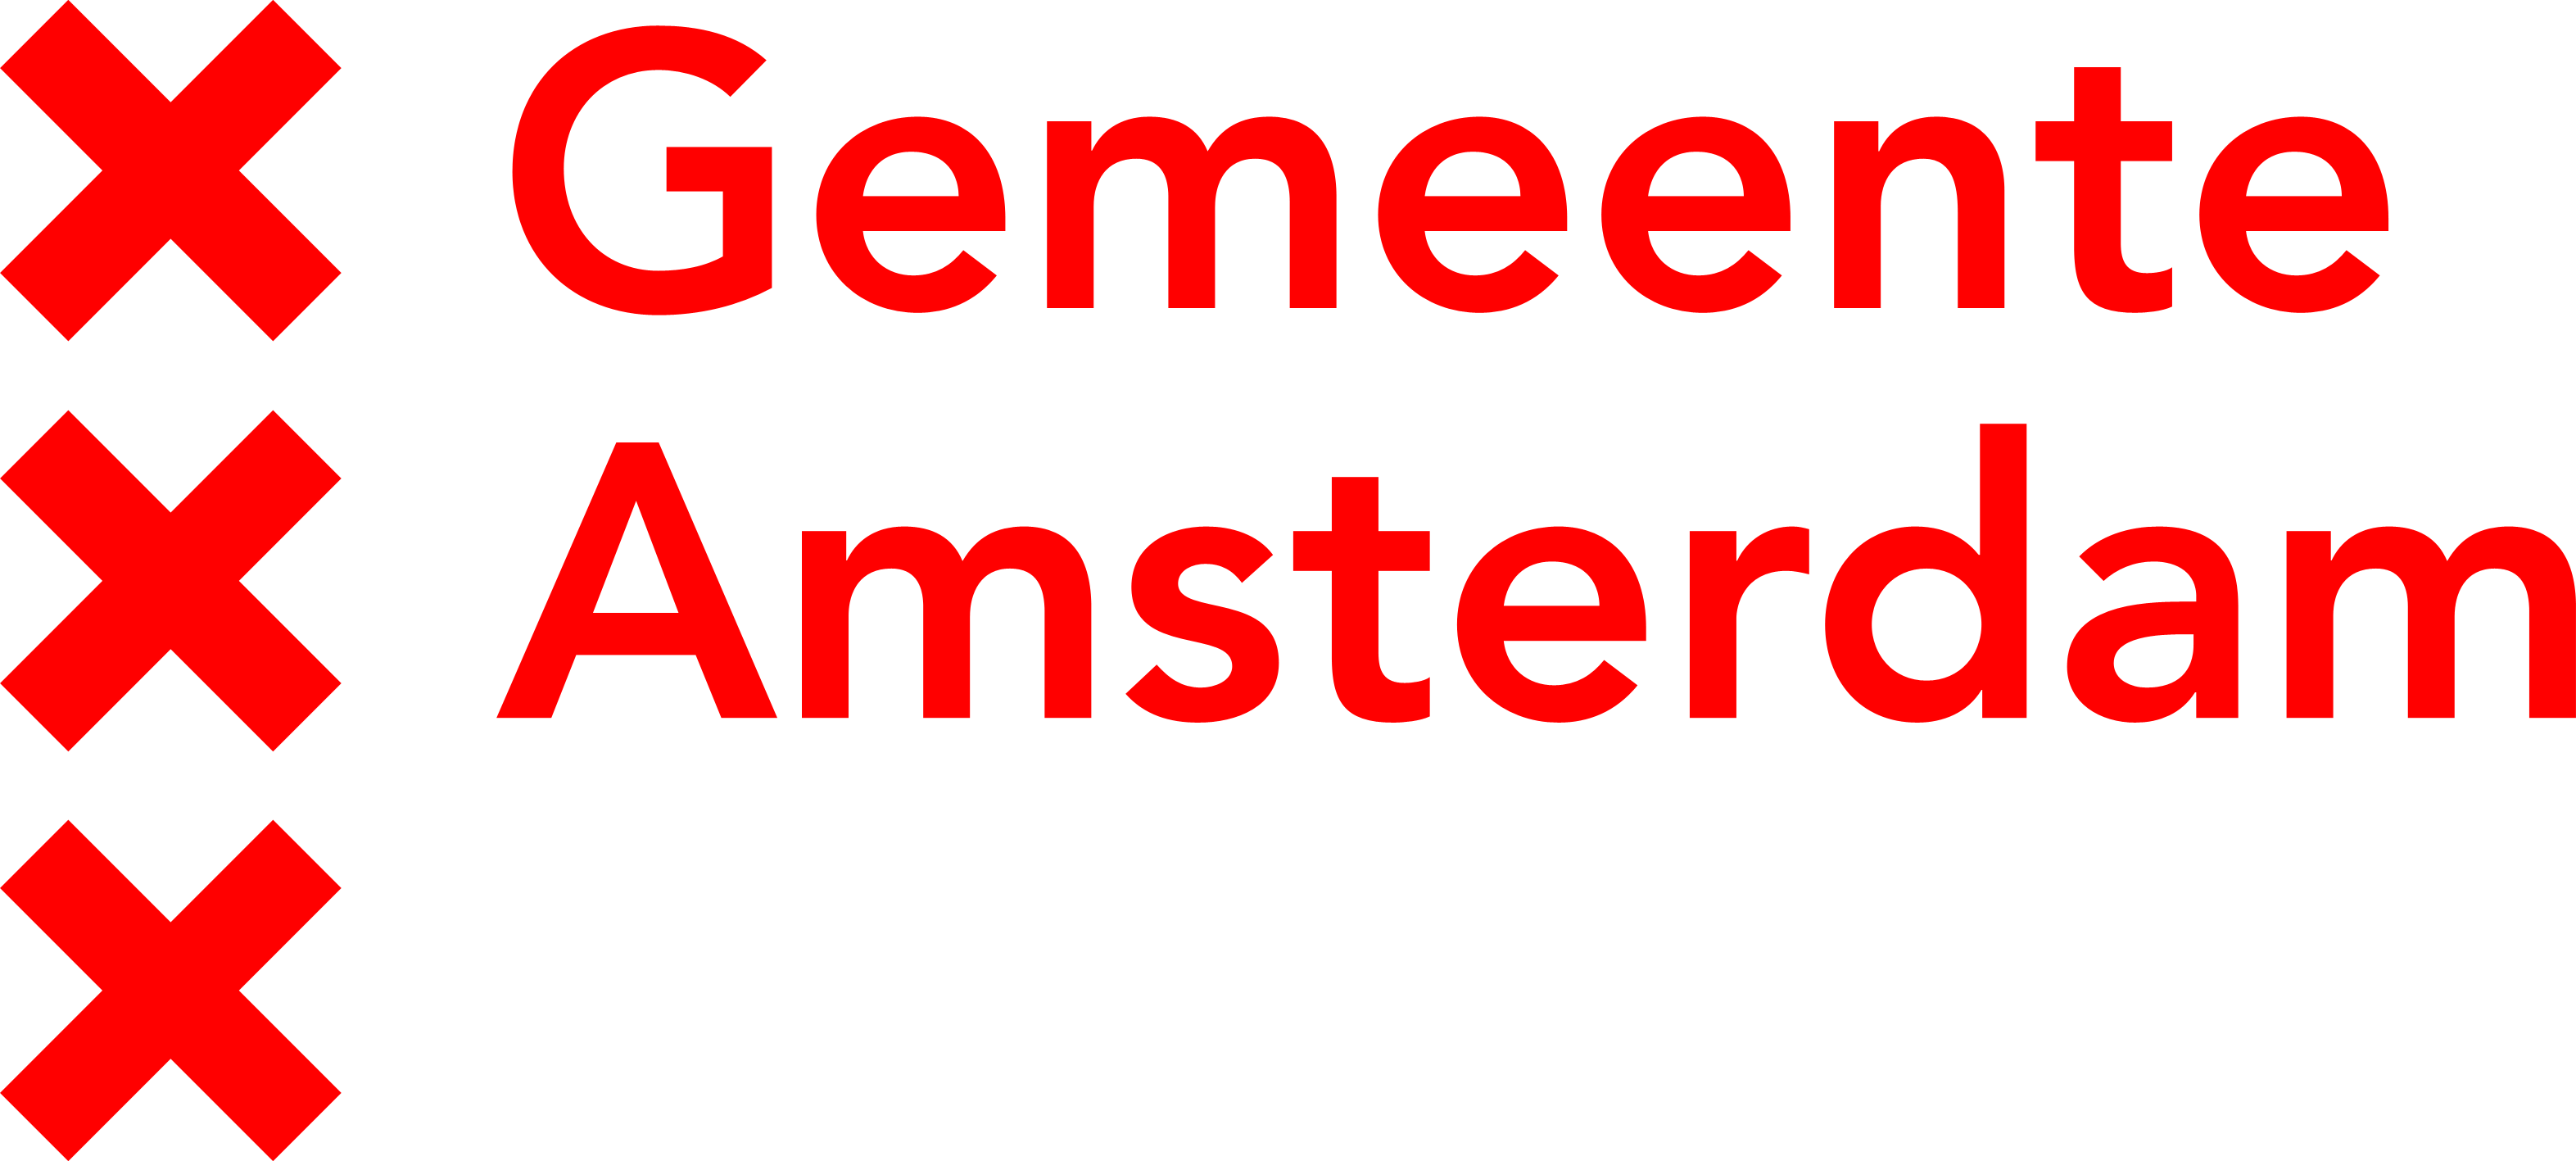 Amsterdam Logo Logodix